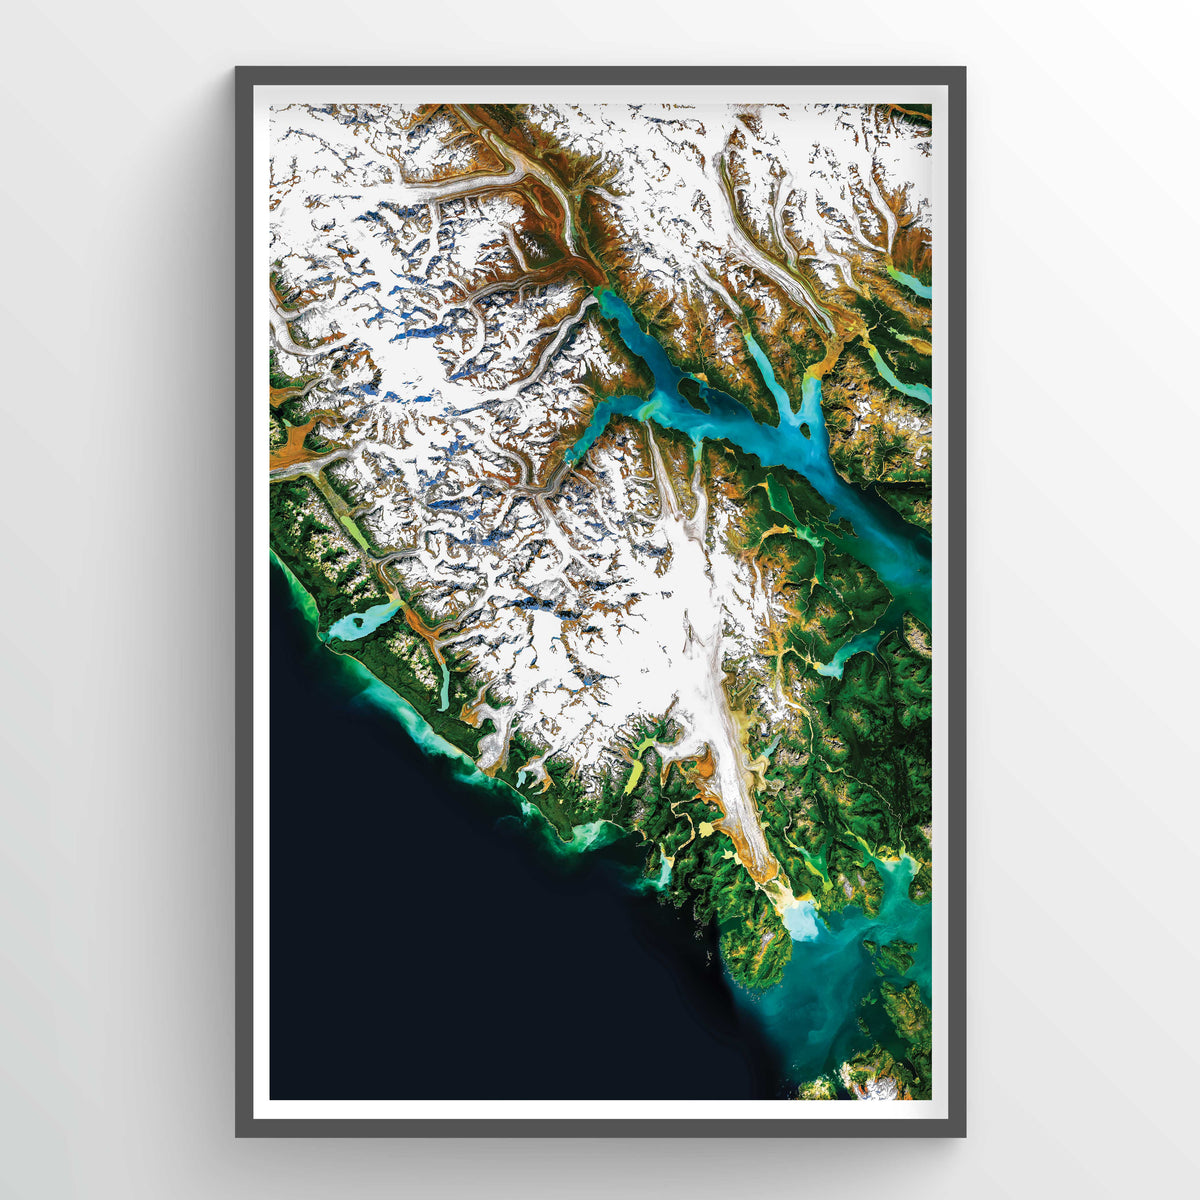 Glacier Bay Alaska - Fine Art